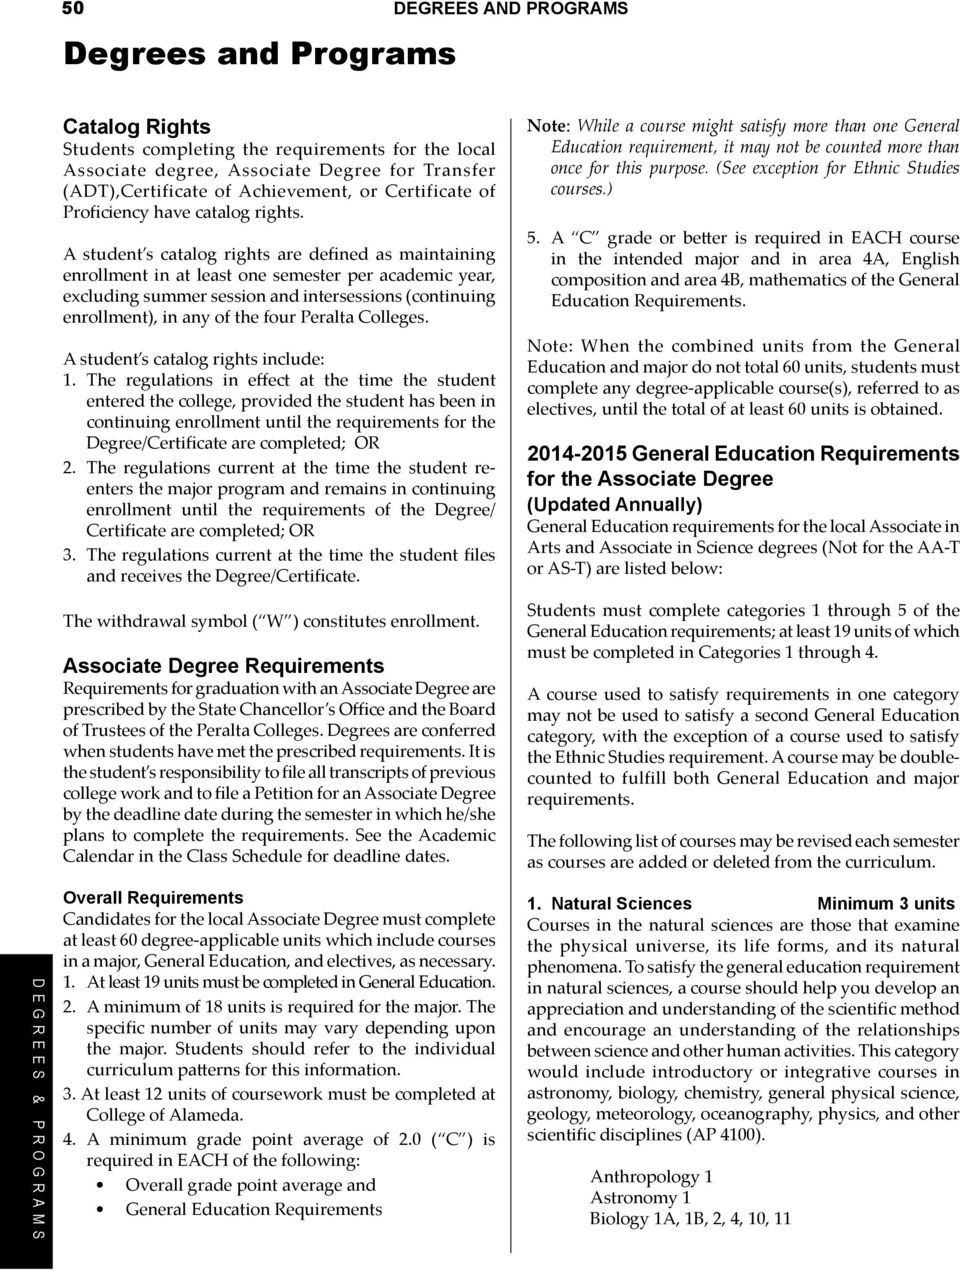 degrees and programs - pdf